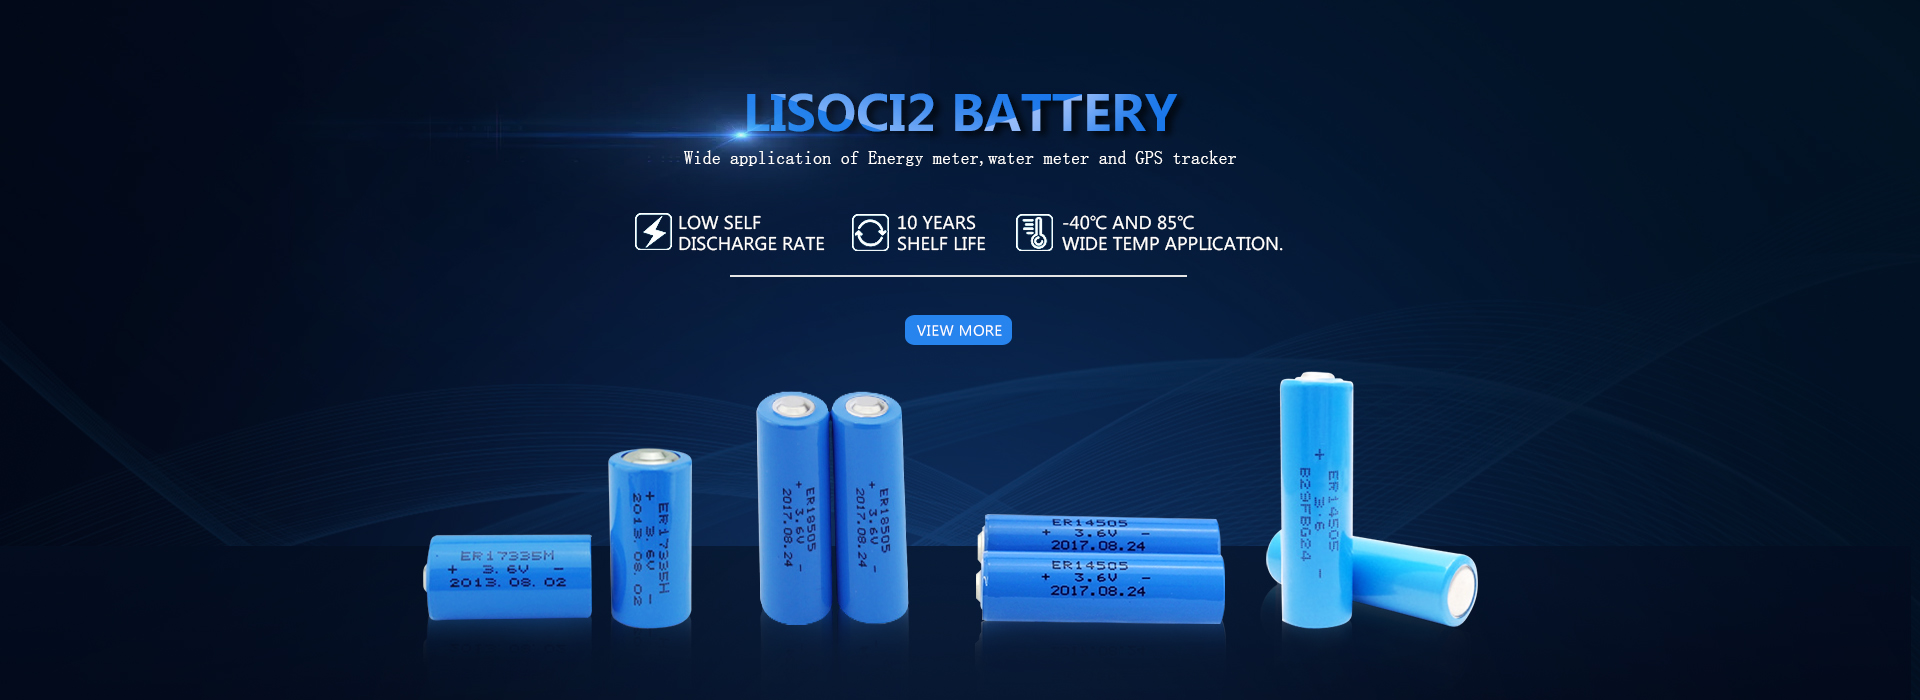 LiSoci2-producenter